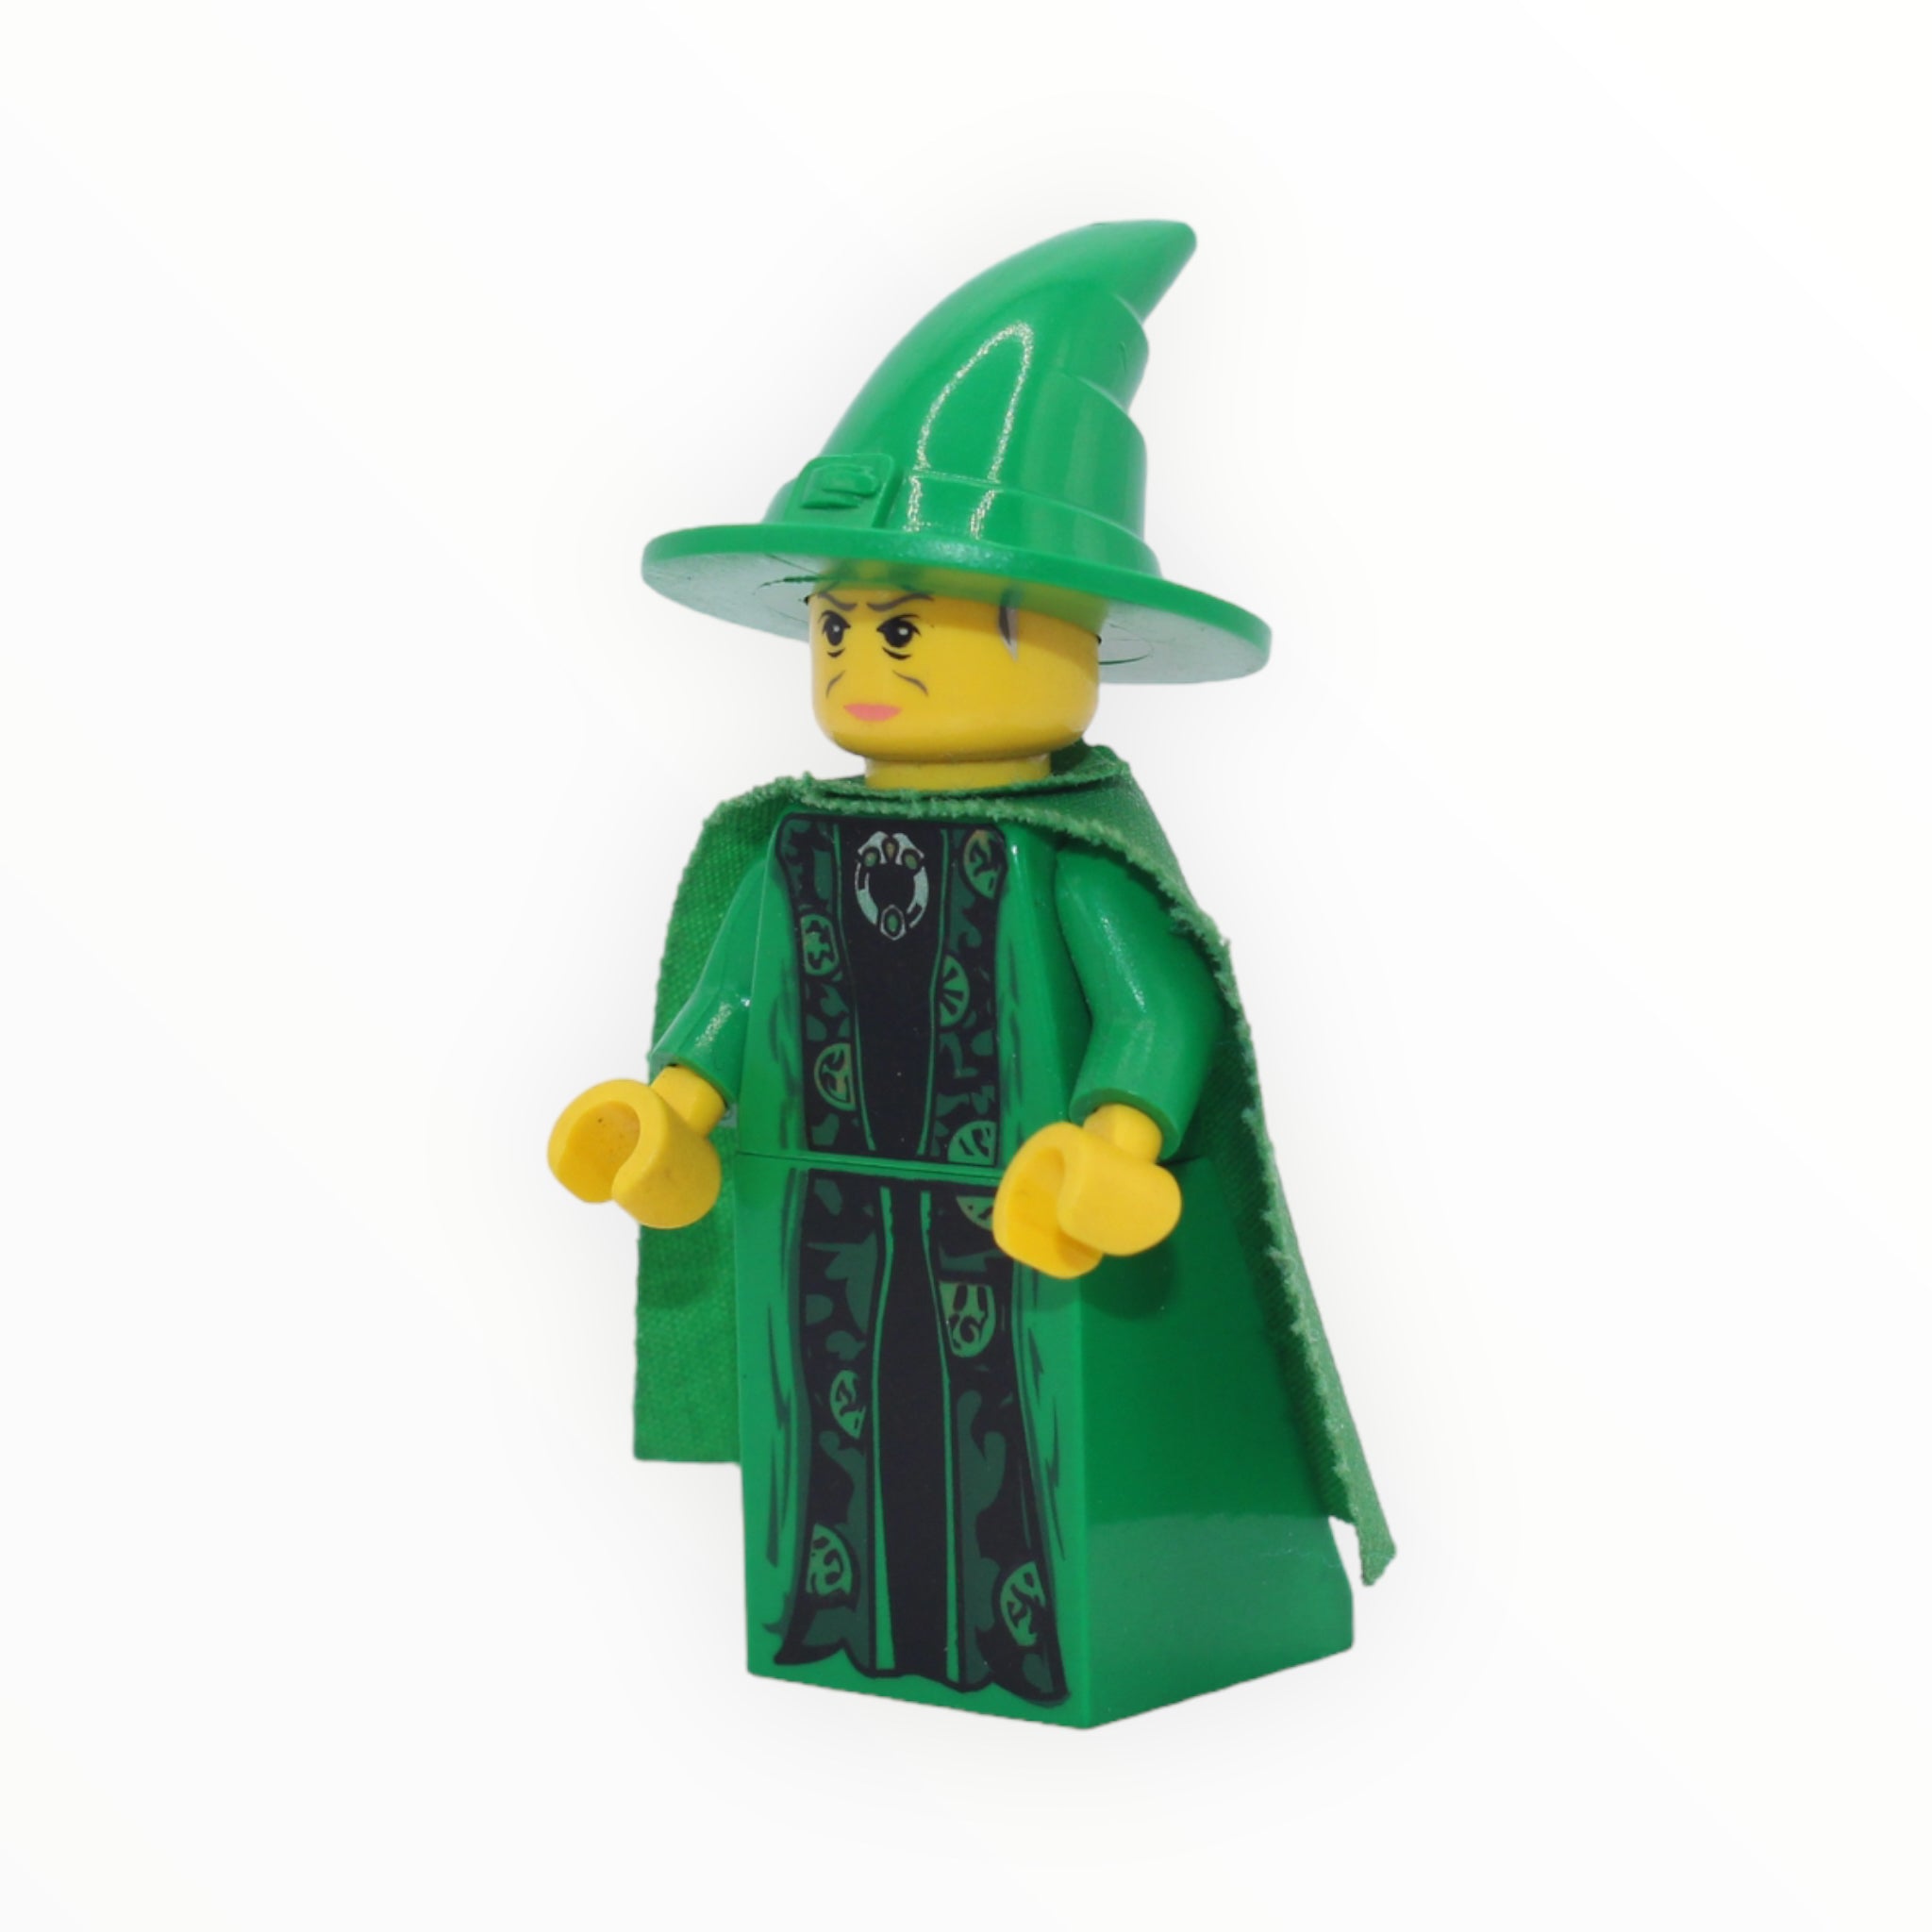 Professor Minerva McGonagall (yellow skin, green robe and cape, 2002)